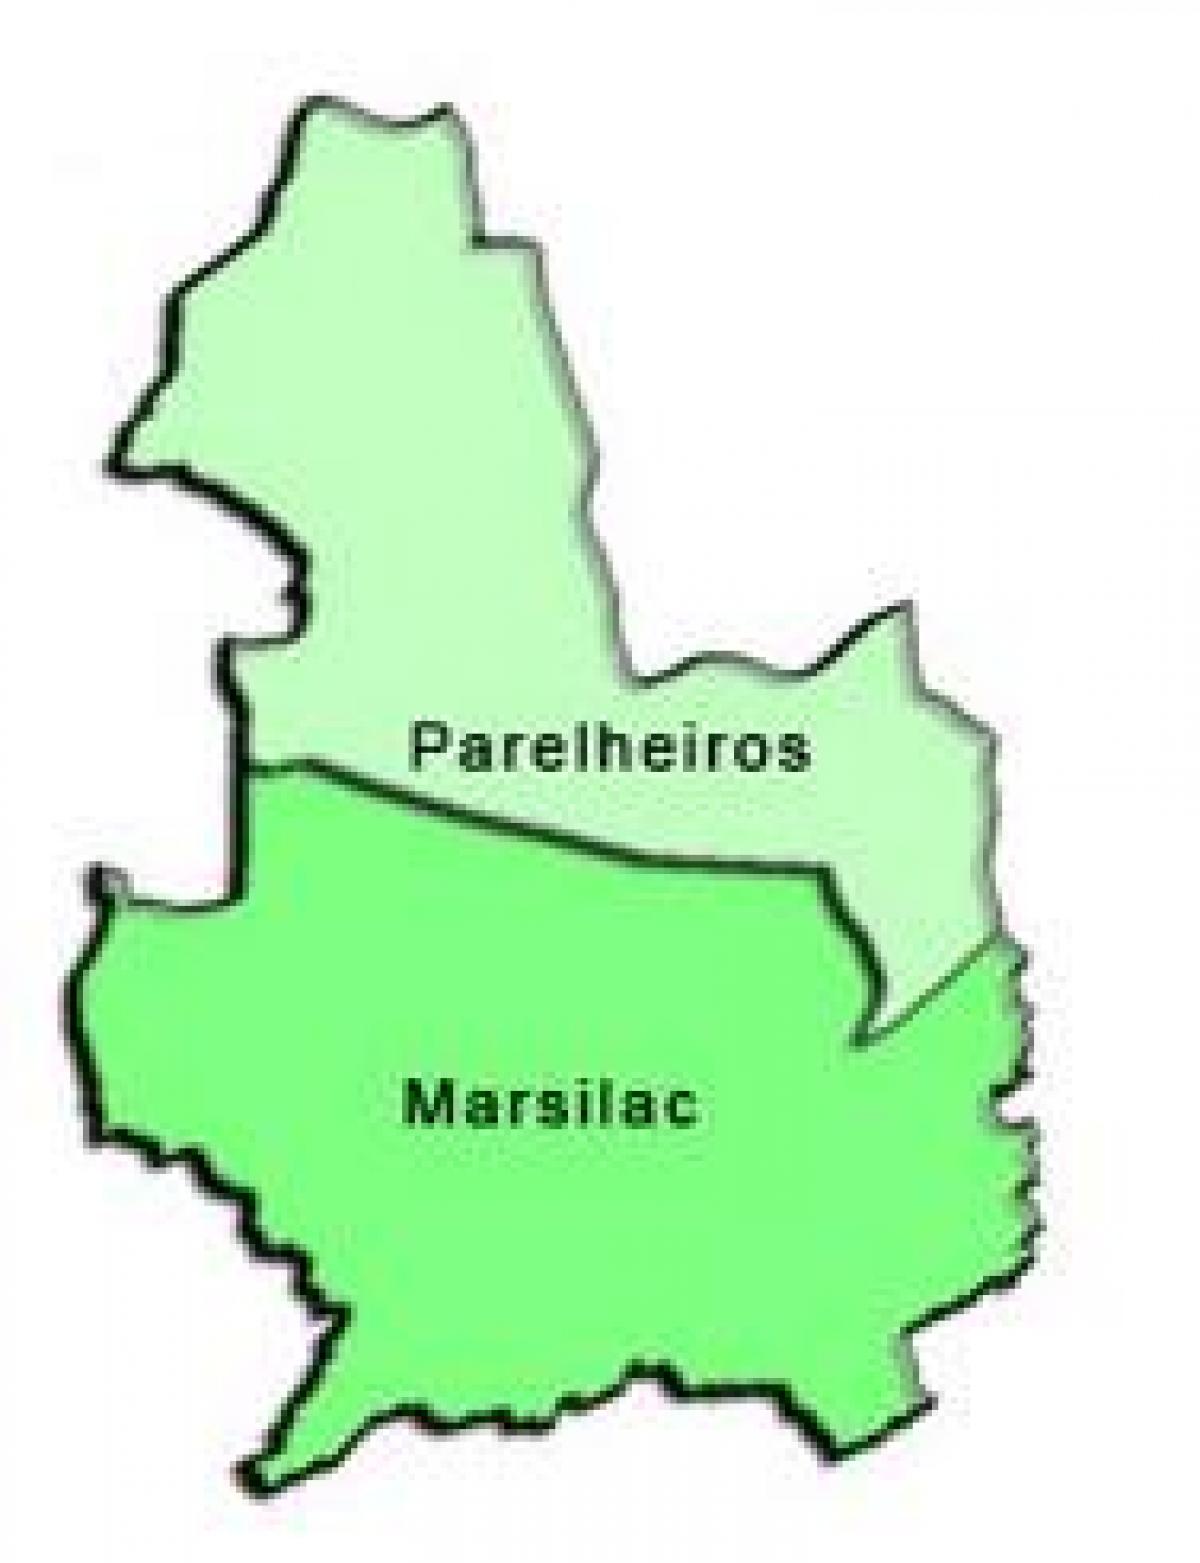 Karta över Parelheiros sub-prefekturen